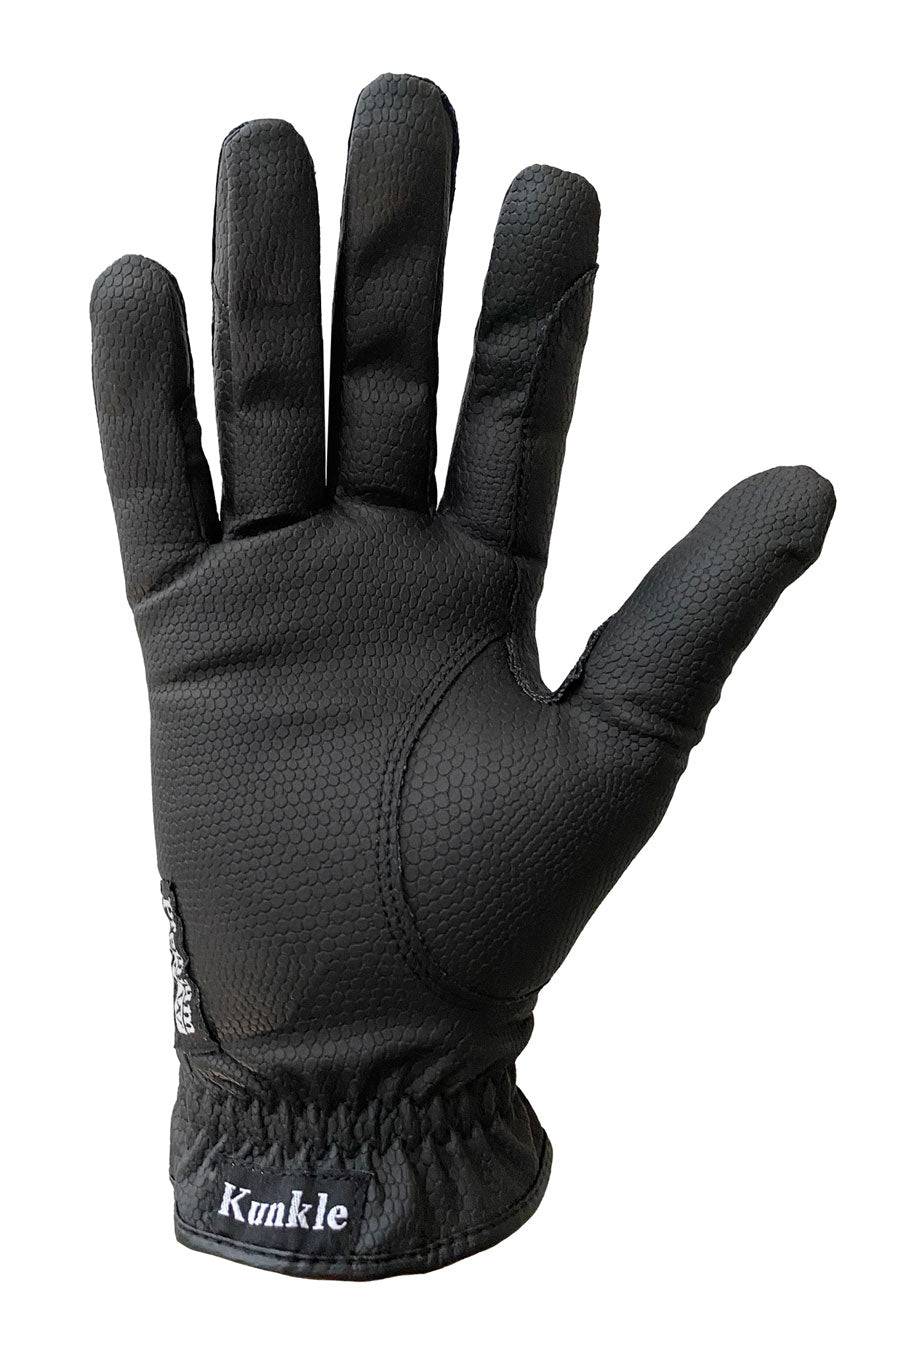 Kunkle Premium Mesh Show Gloves